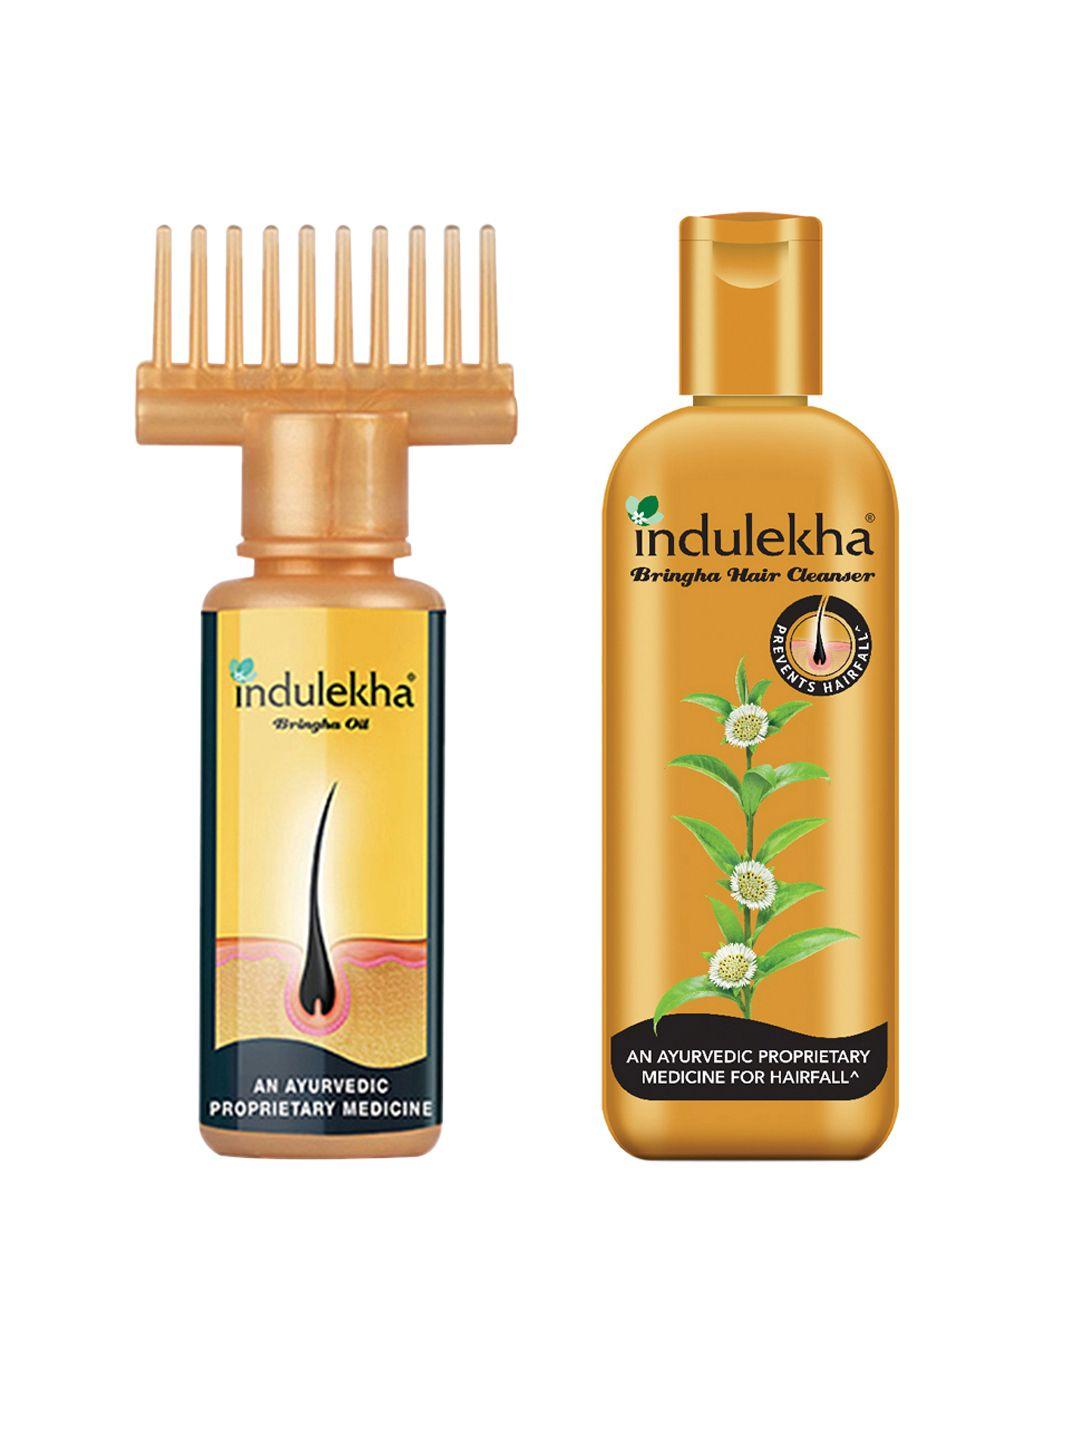 indulekha set of bringha hair oil & anti-hairfall shampoo